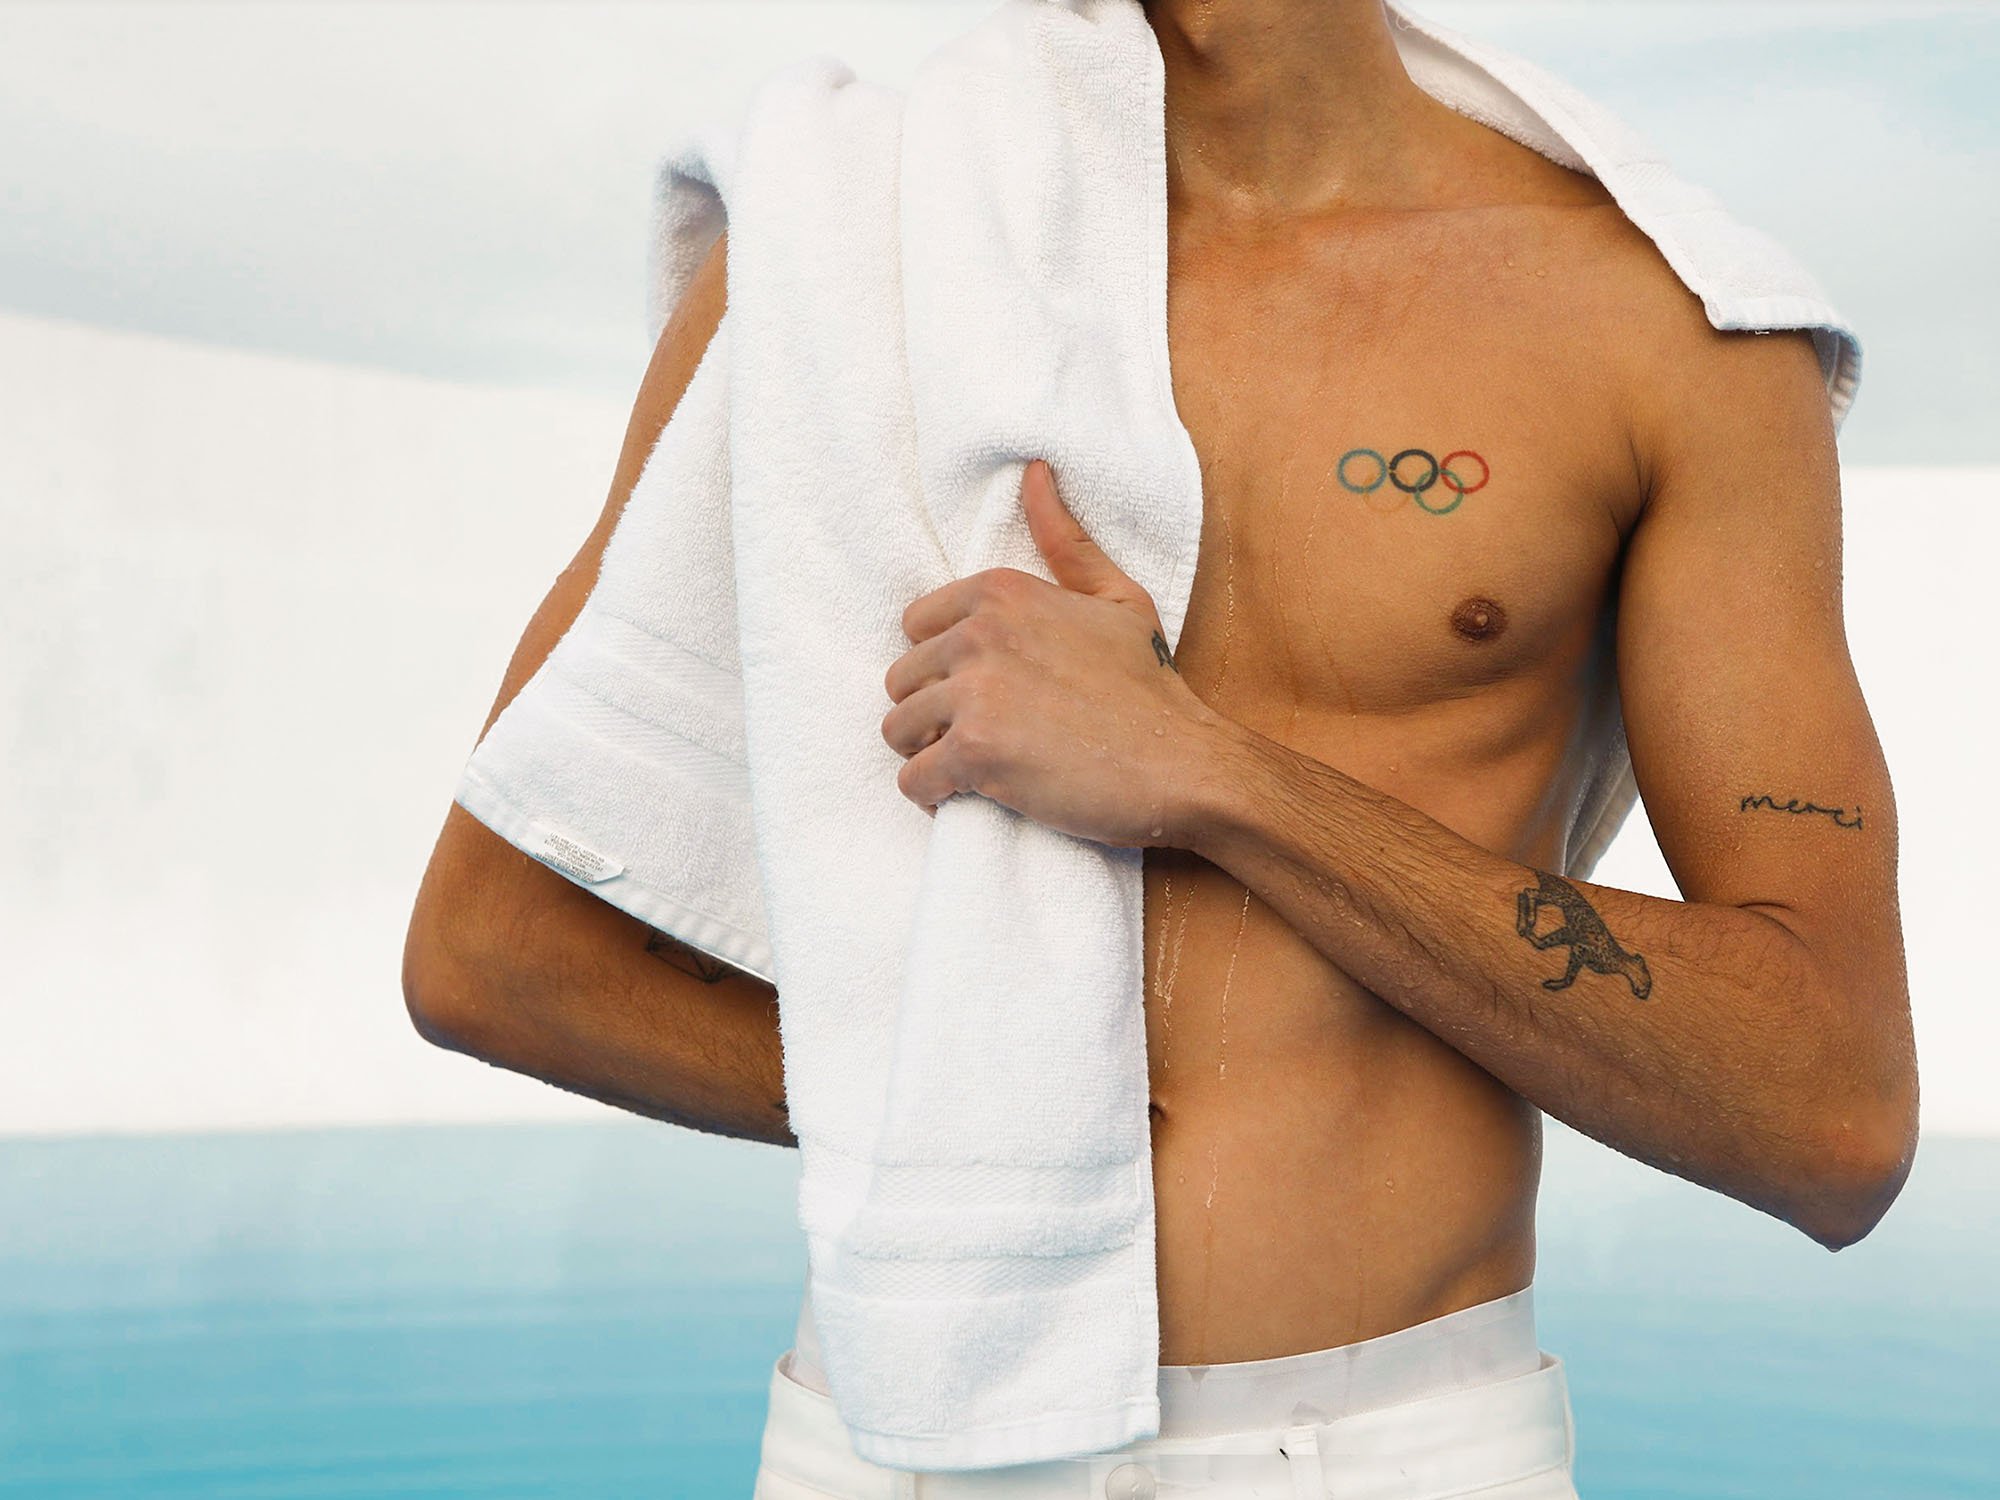 Shirtless man holding towel over his shoulder